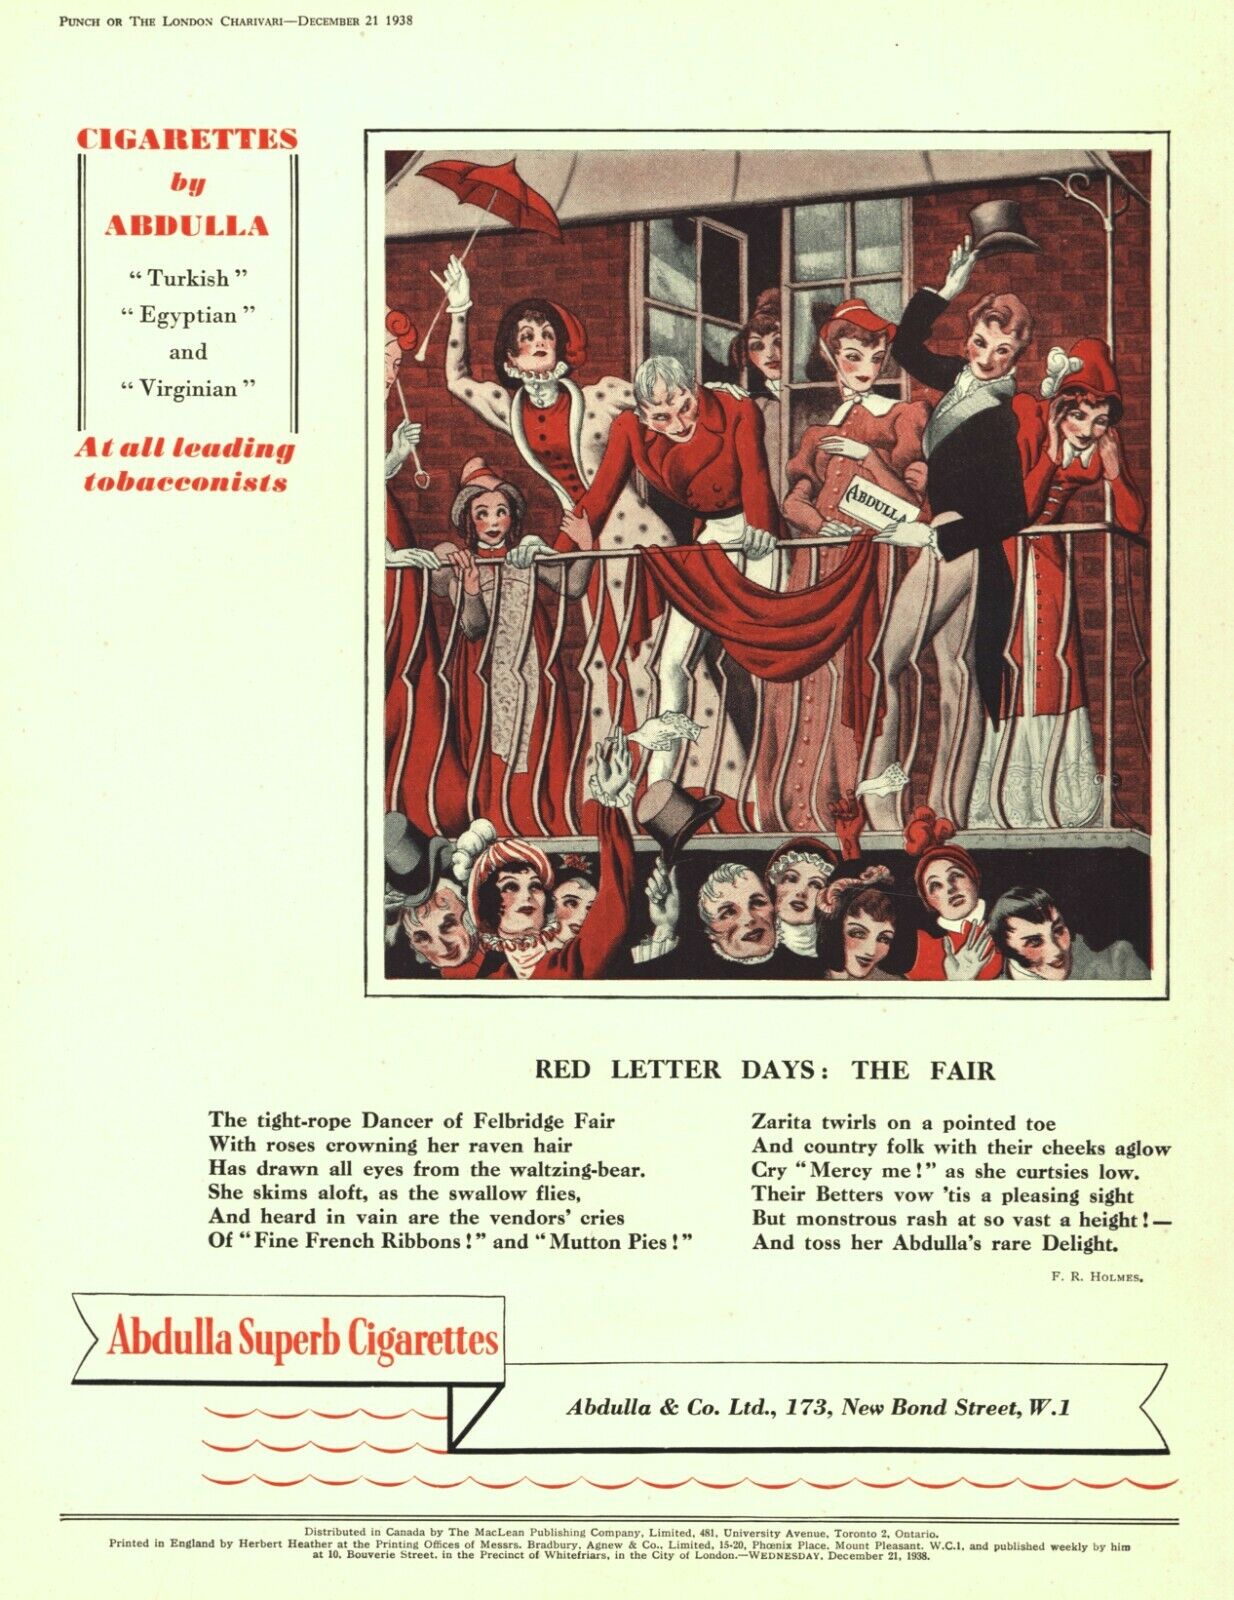 ABDULLA CIGARETTES - Vintage 1938 ADVERTISEMENT - Arthur Wragg Illustration?